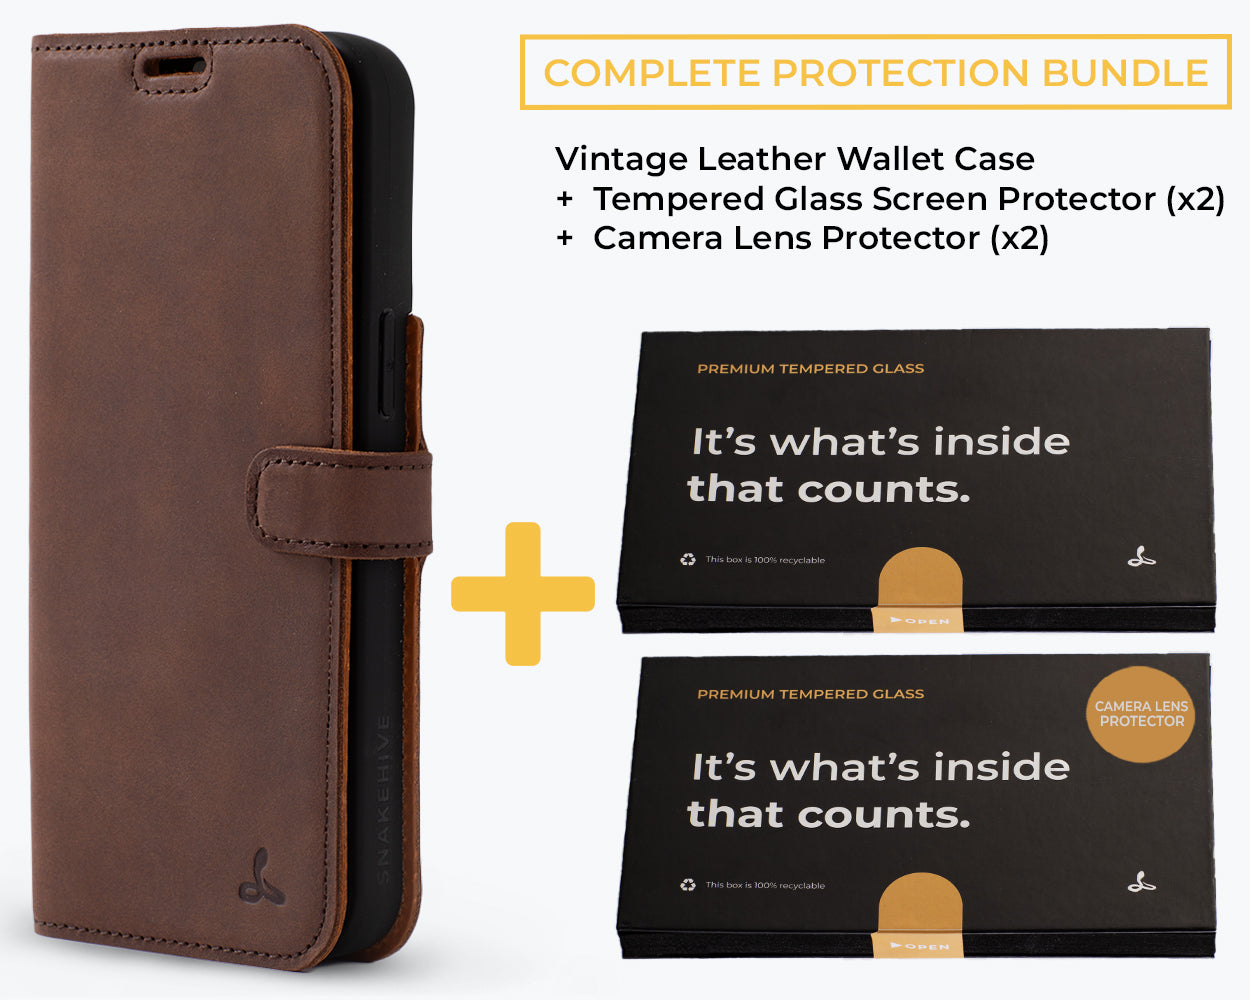 Complete Protection Bundle (Vintage Wallet) - Apple iPhone 12 Pro Max